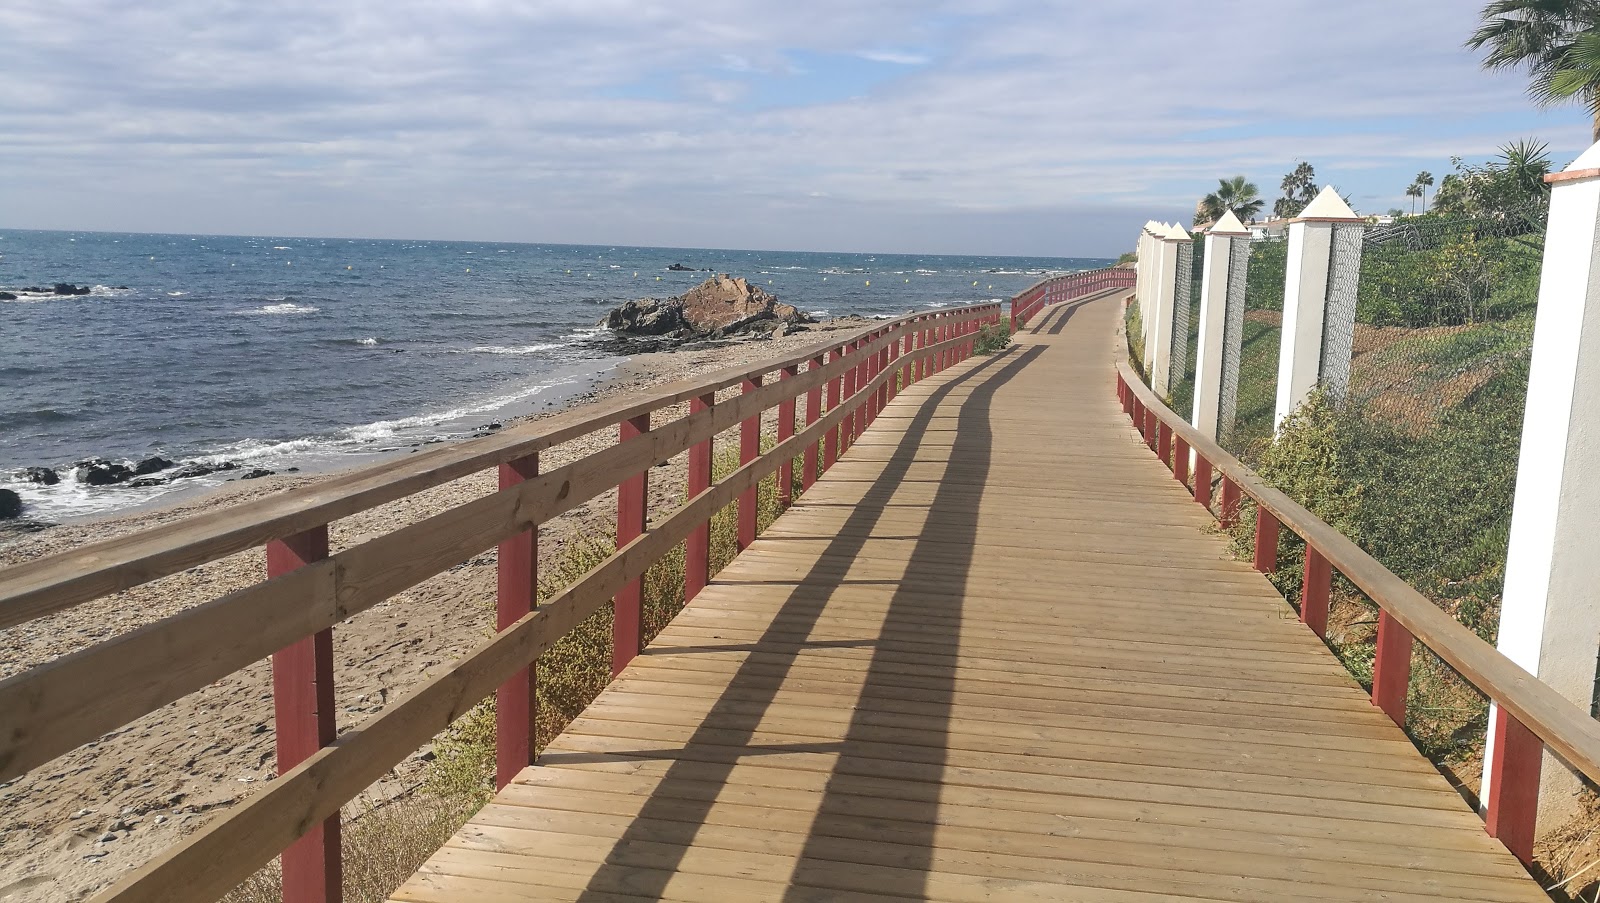 Foto de Playa Riviera com alto nível de limpeza